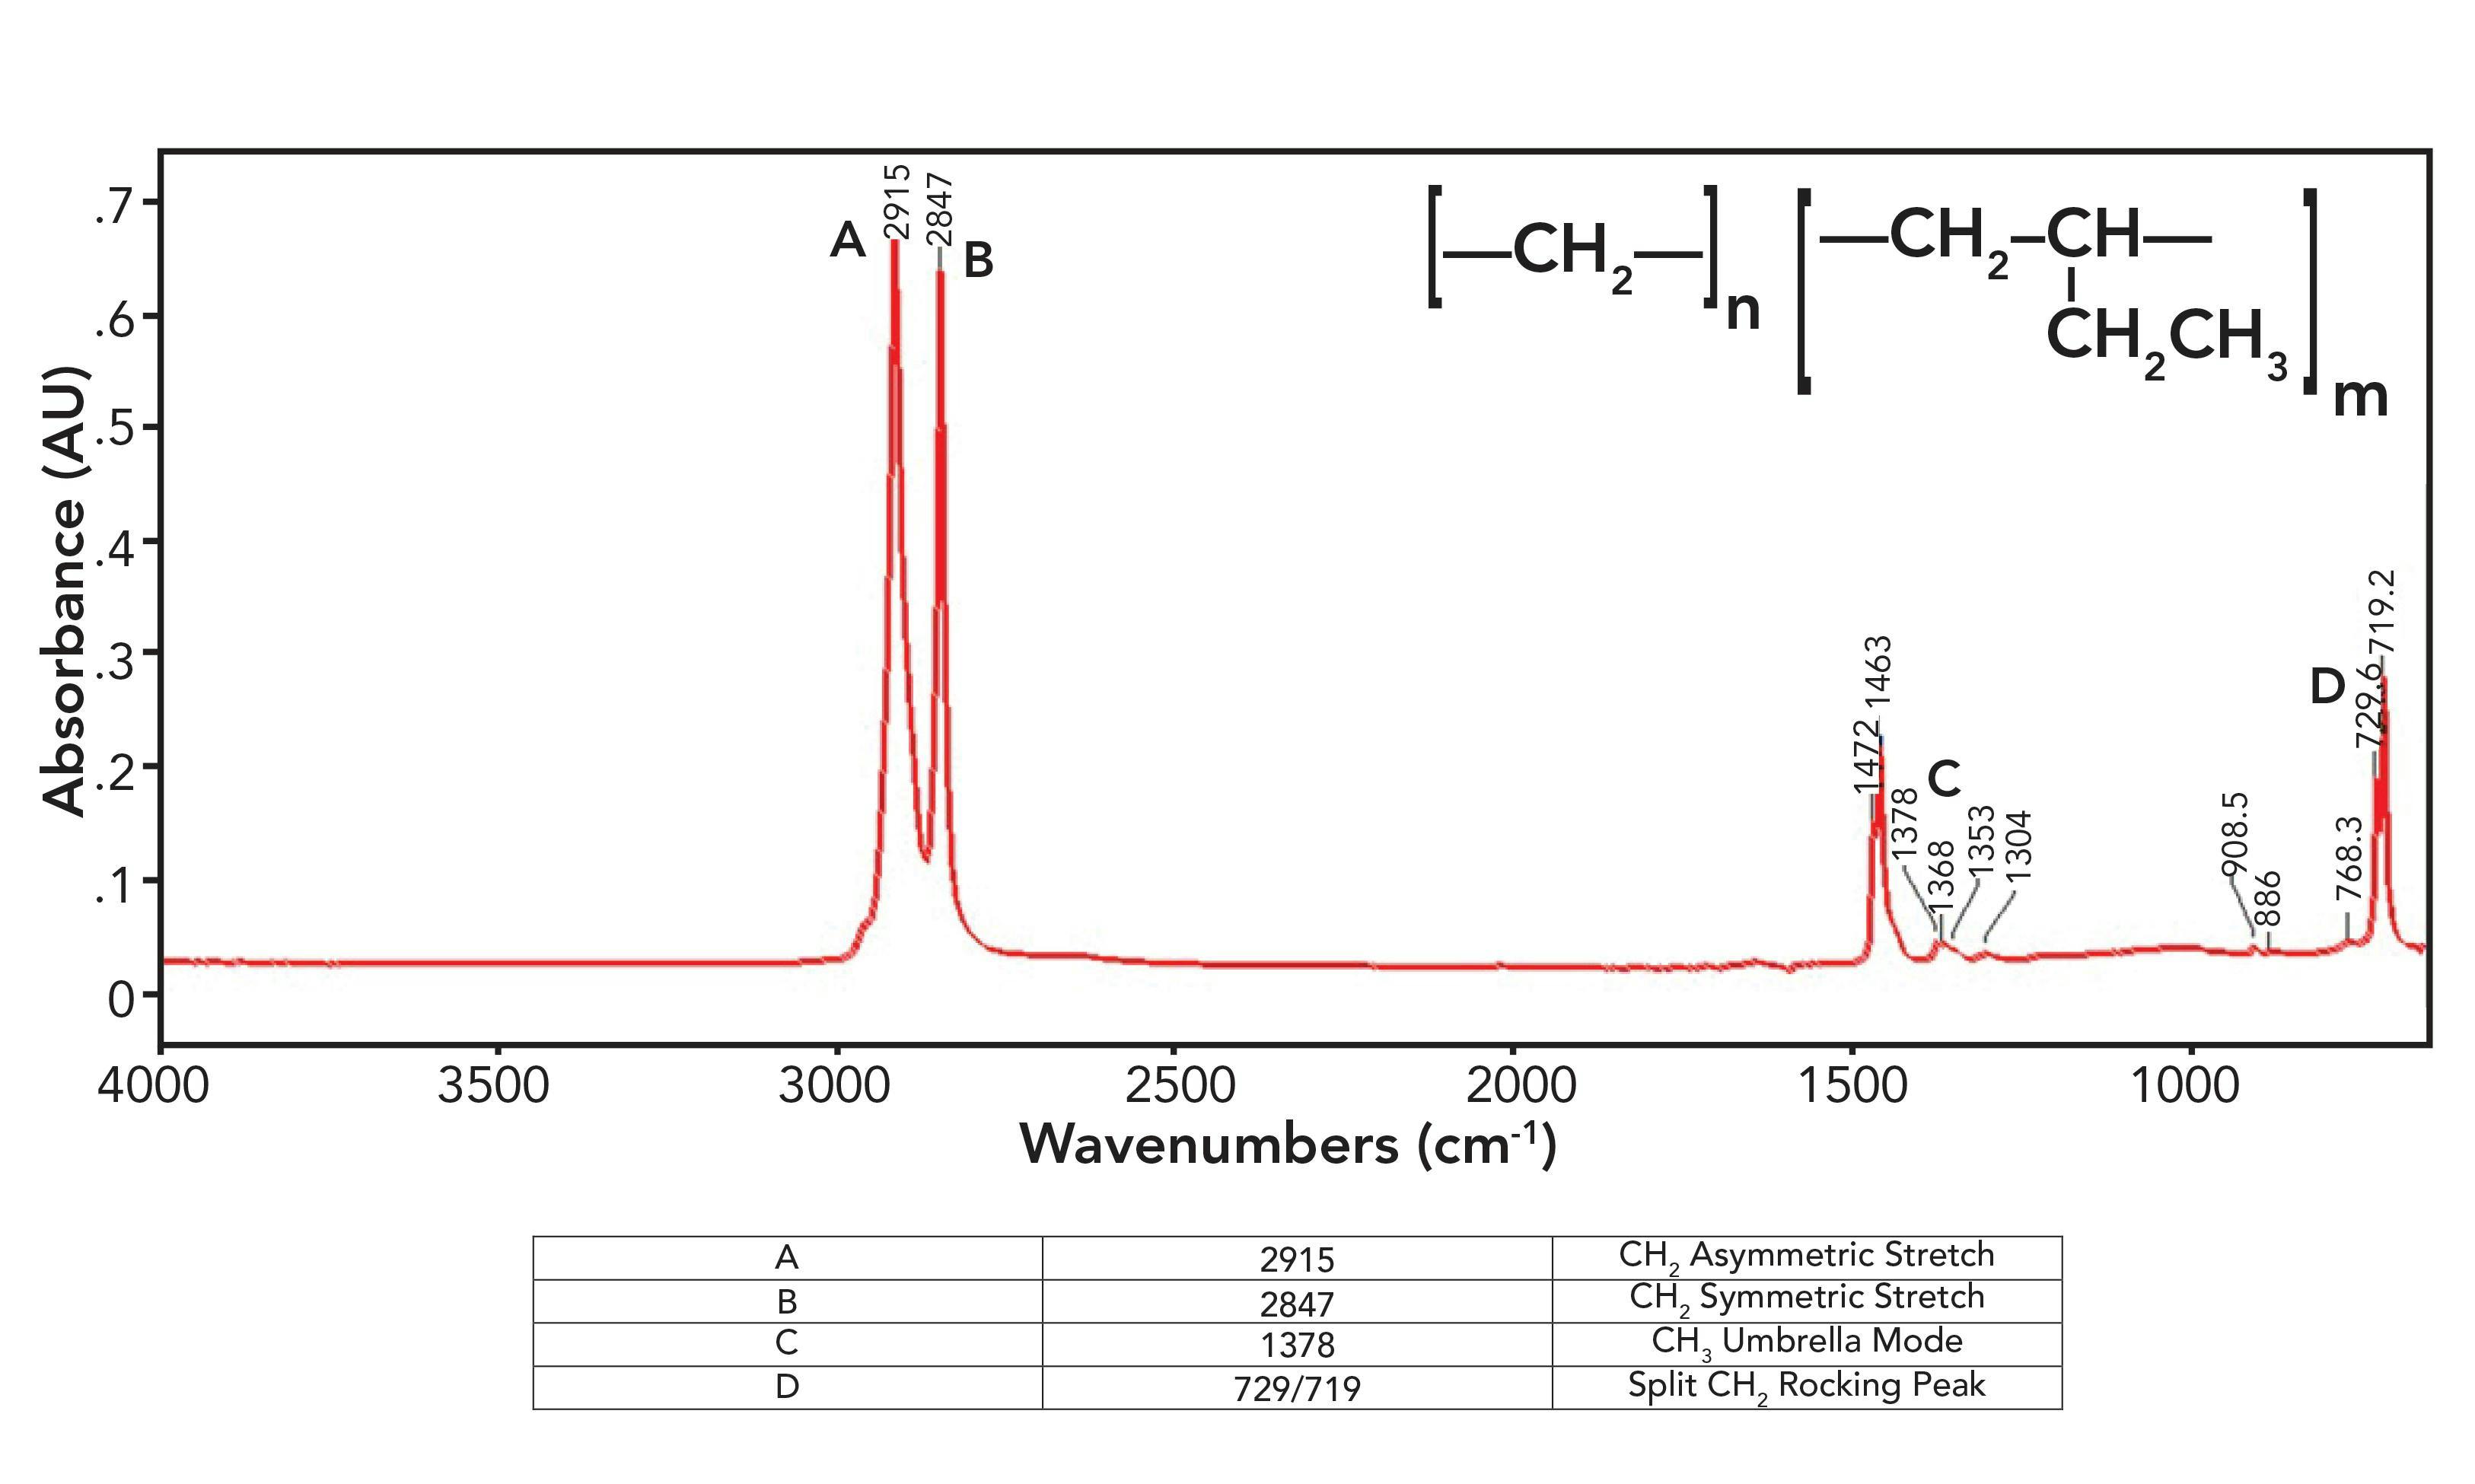 Figure 6: The infrared spectrum of linear low-density (LLDPE) polyethylene.